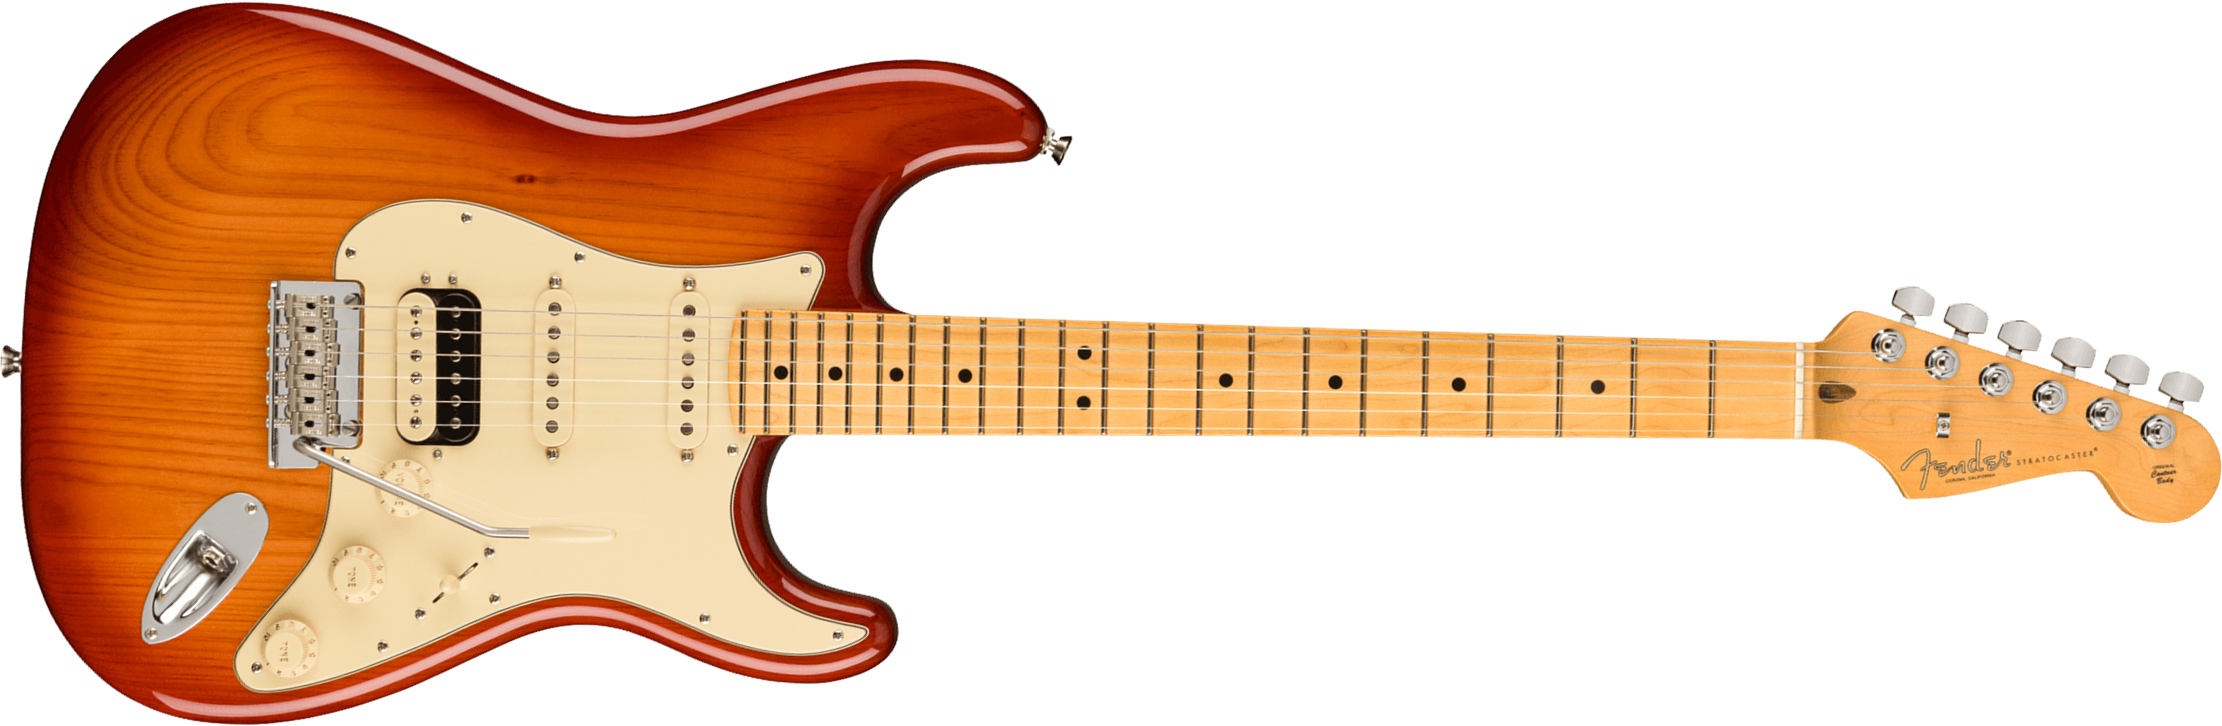 Fender Strat American Professional Ii Hss Usa Mn - Sienna Sunburst - Guitarra eléctrica con forma de str. - Main picture